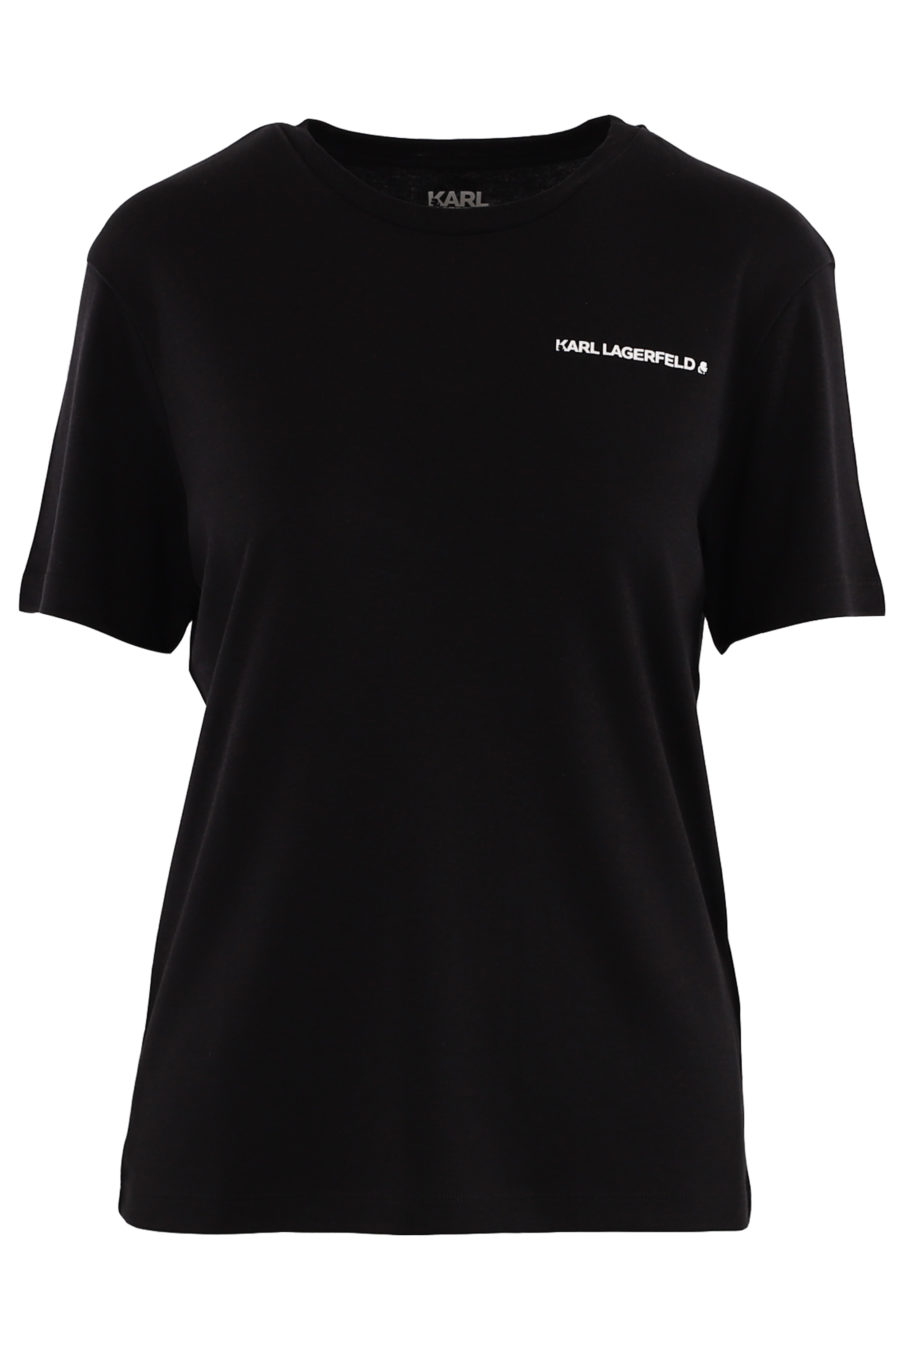 Camiseta unisex de color negro con logotipo - 987c3f0aa544f6663ed73989617515d93b2efb9d